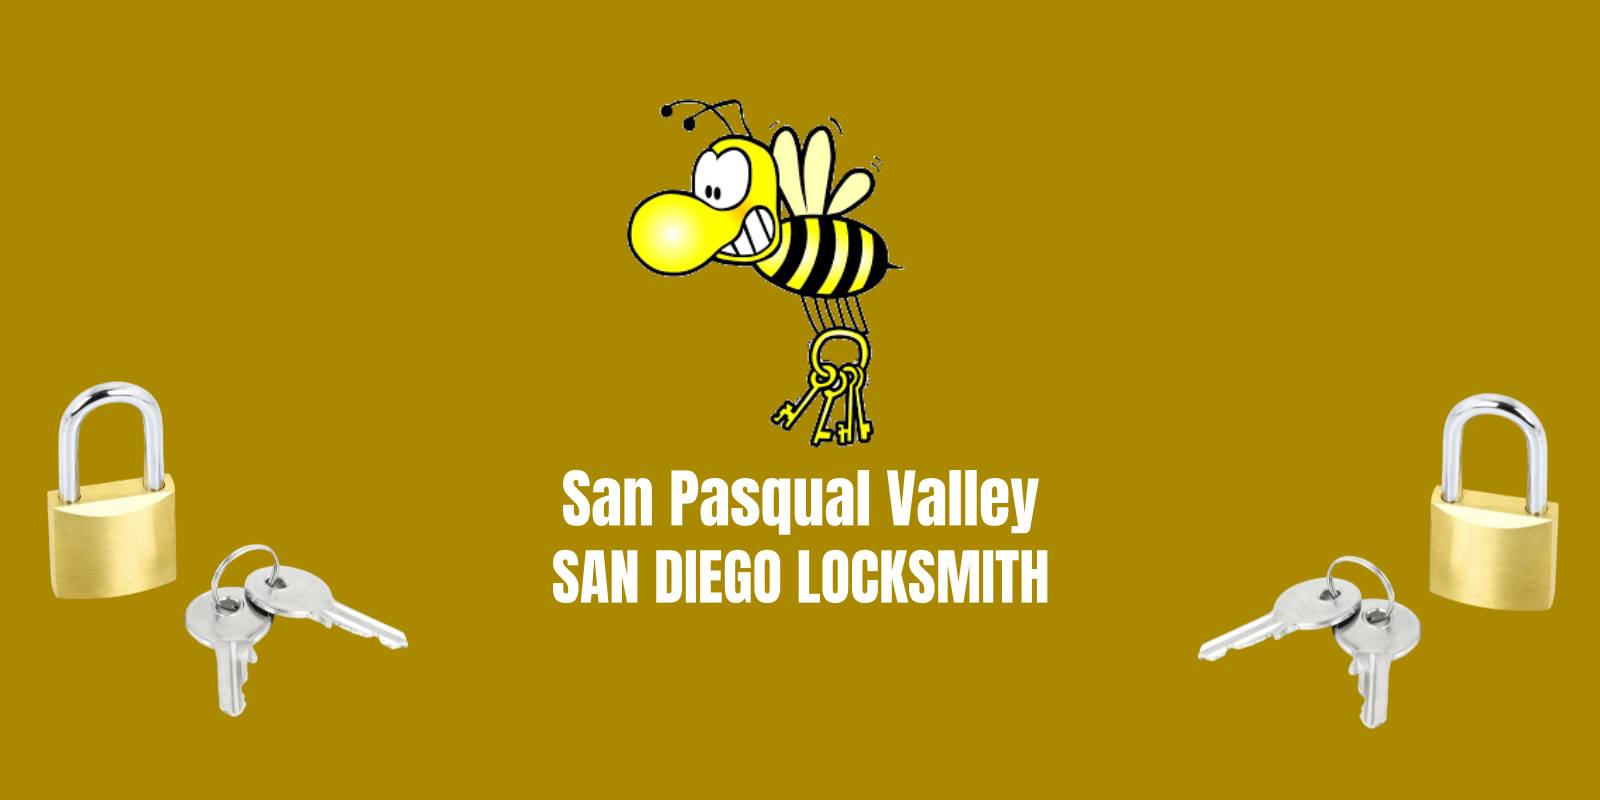 Locksmith San Pasqual Valley San Diego